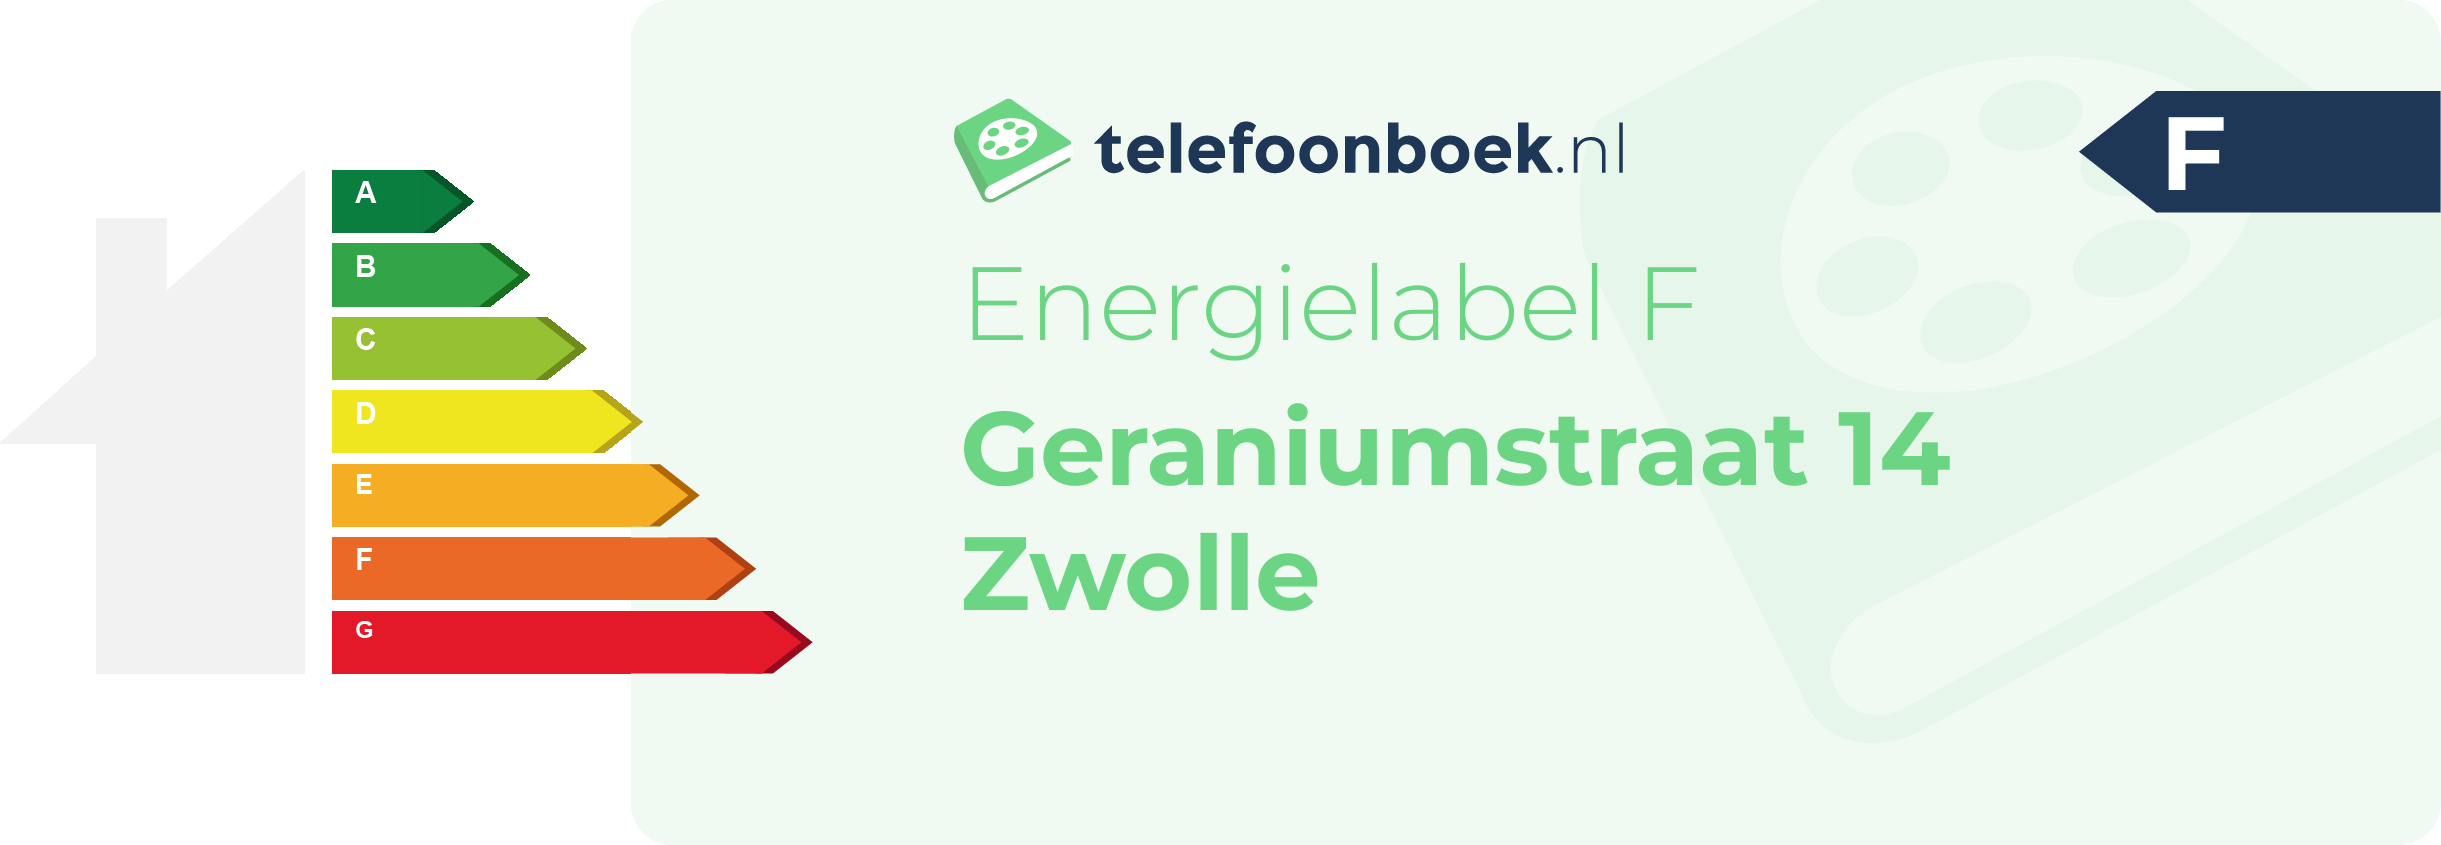 Energielabel Geraniumstraat 14 Zwolle